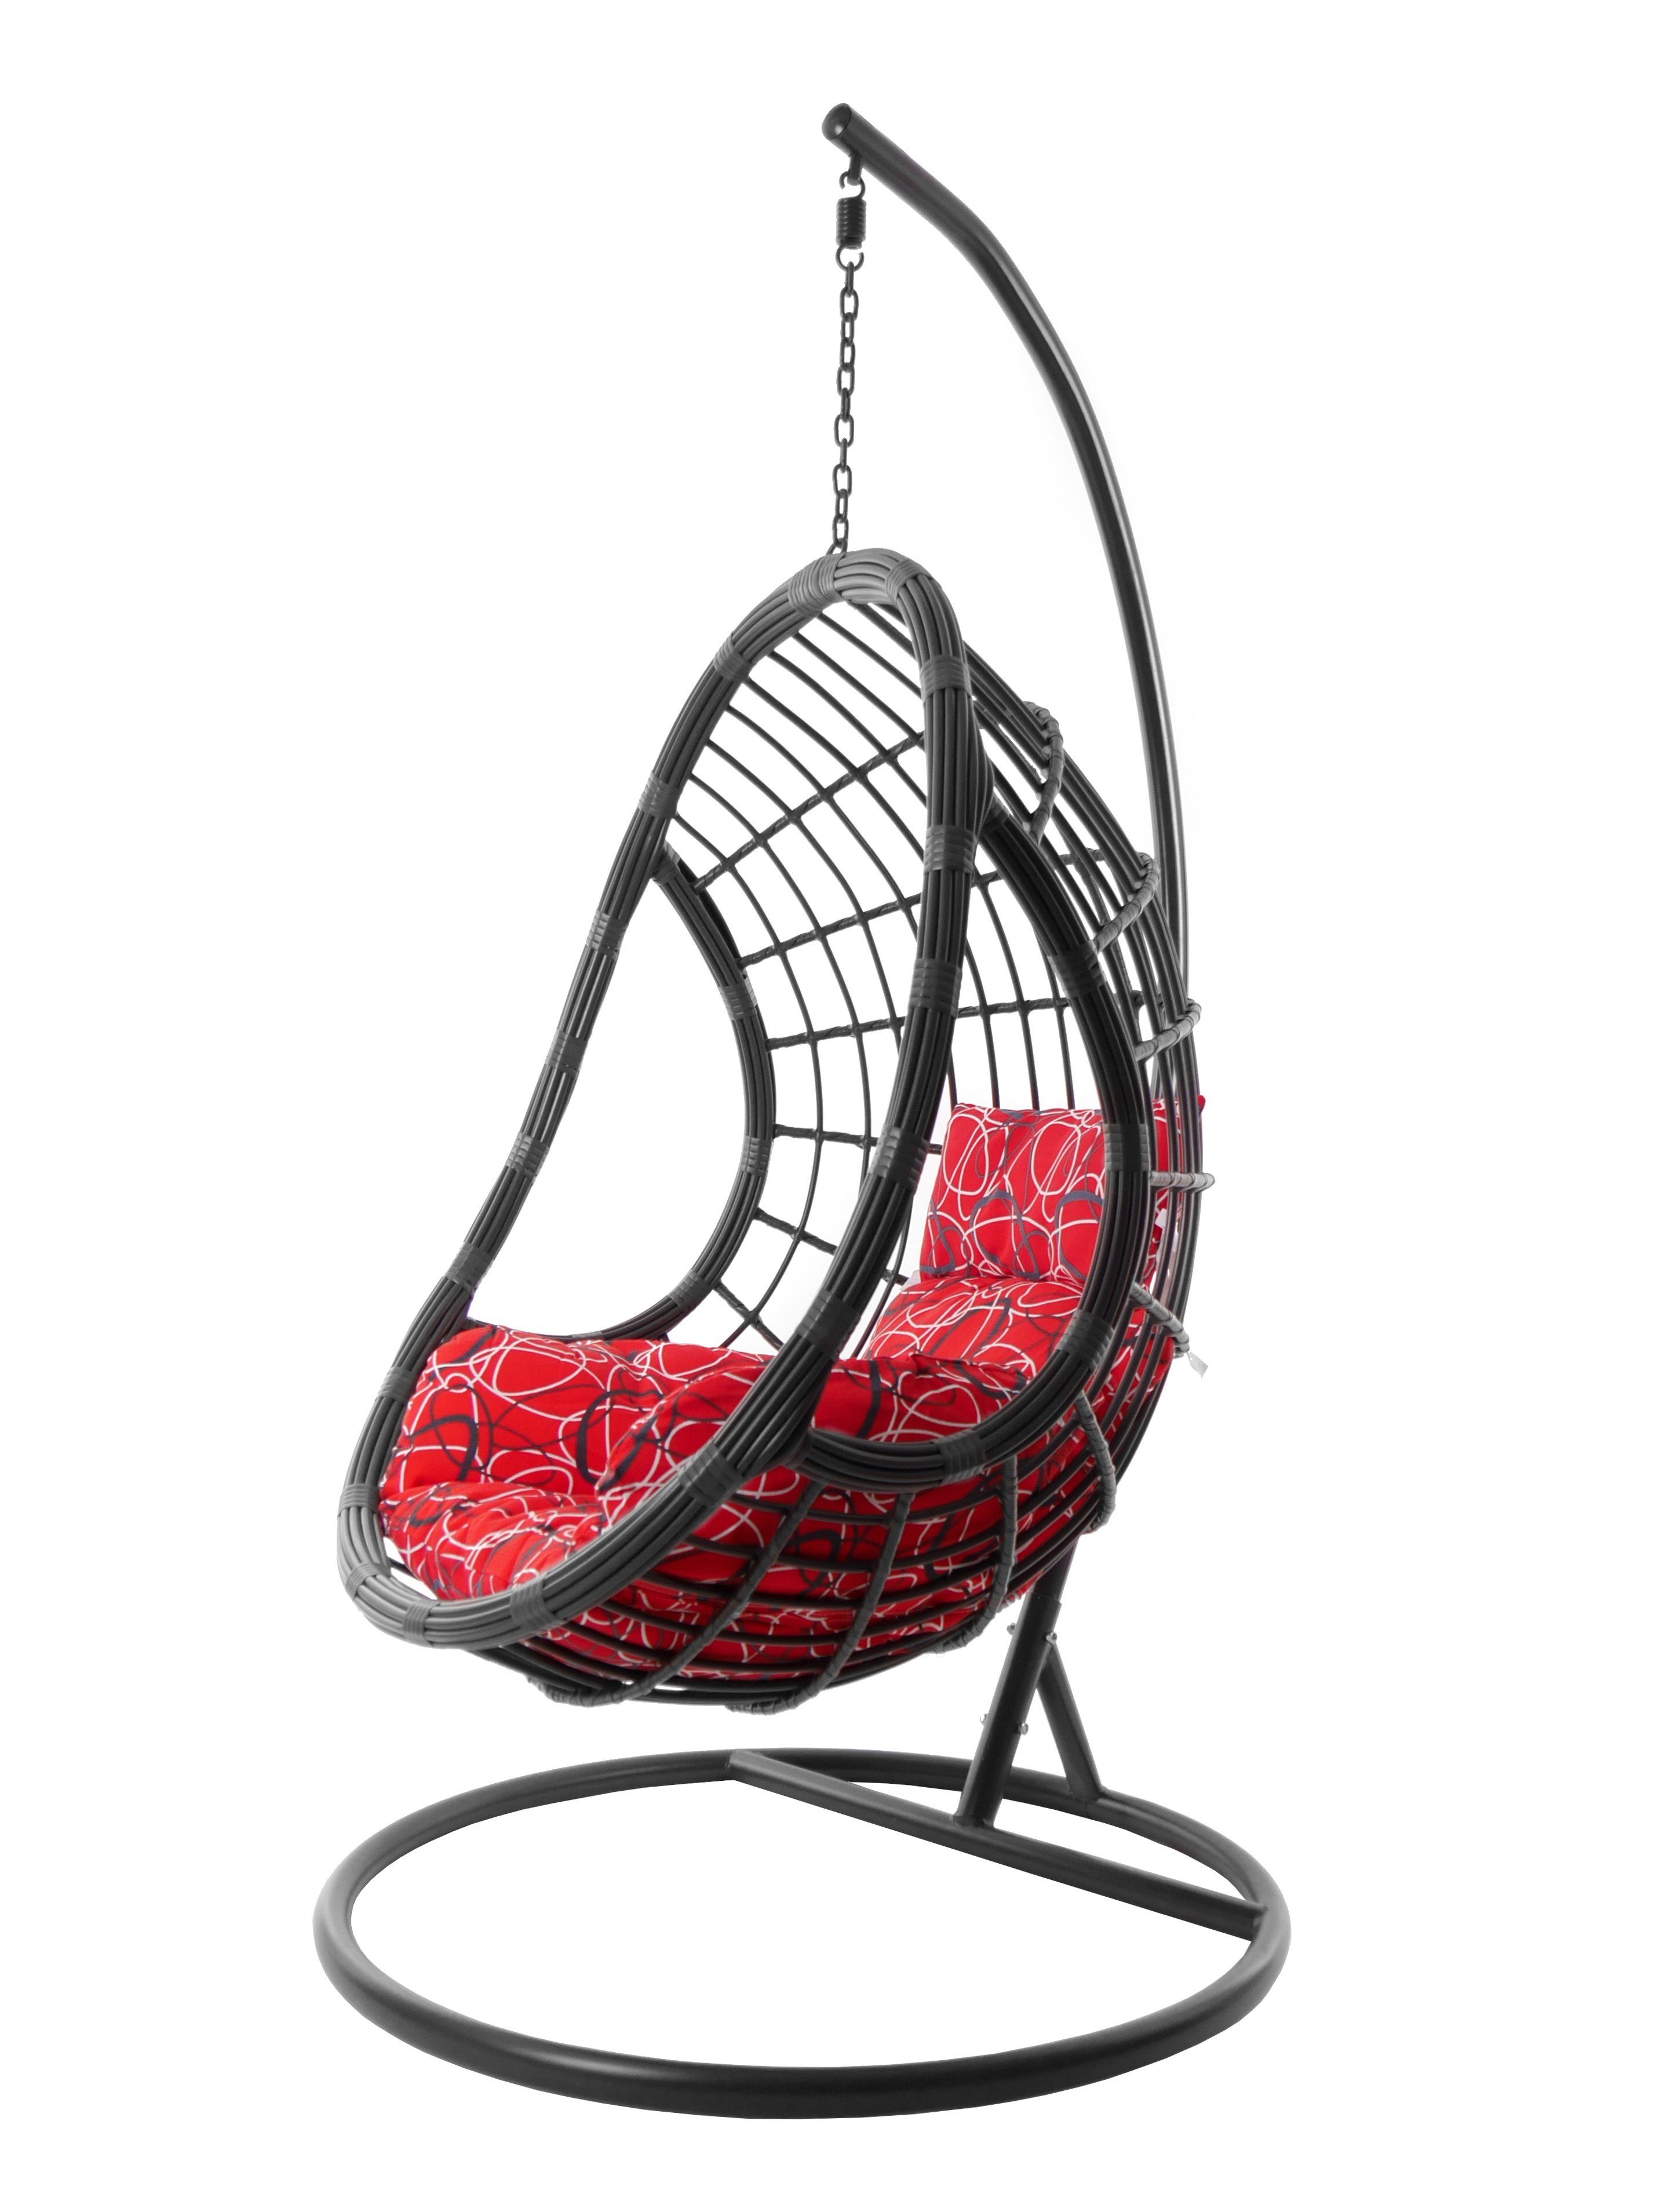 KIDEO Hängesessel Hängesessel PALMANOVA grau, moderne Loungemöbel, Hängestuhl in grau, inklusive Gestell und Kissen rot gemustert (3088 red frizzy) | Hängesessel